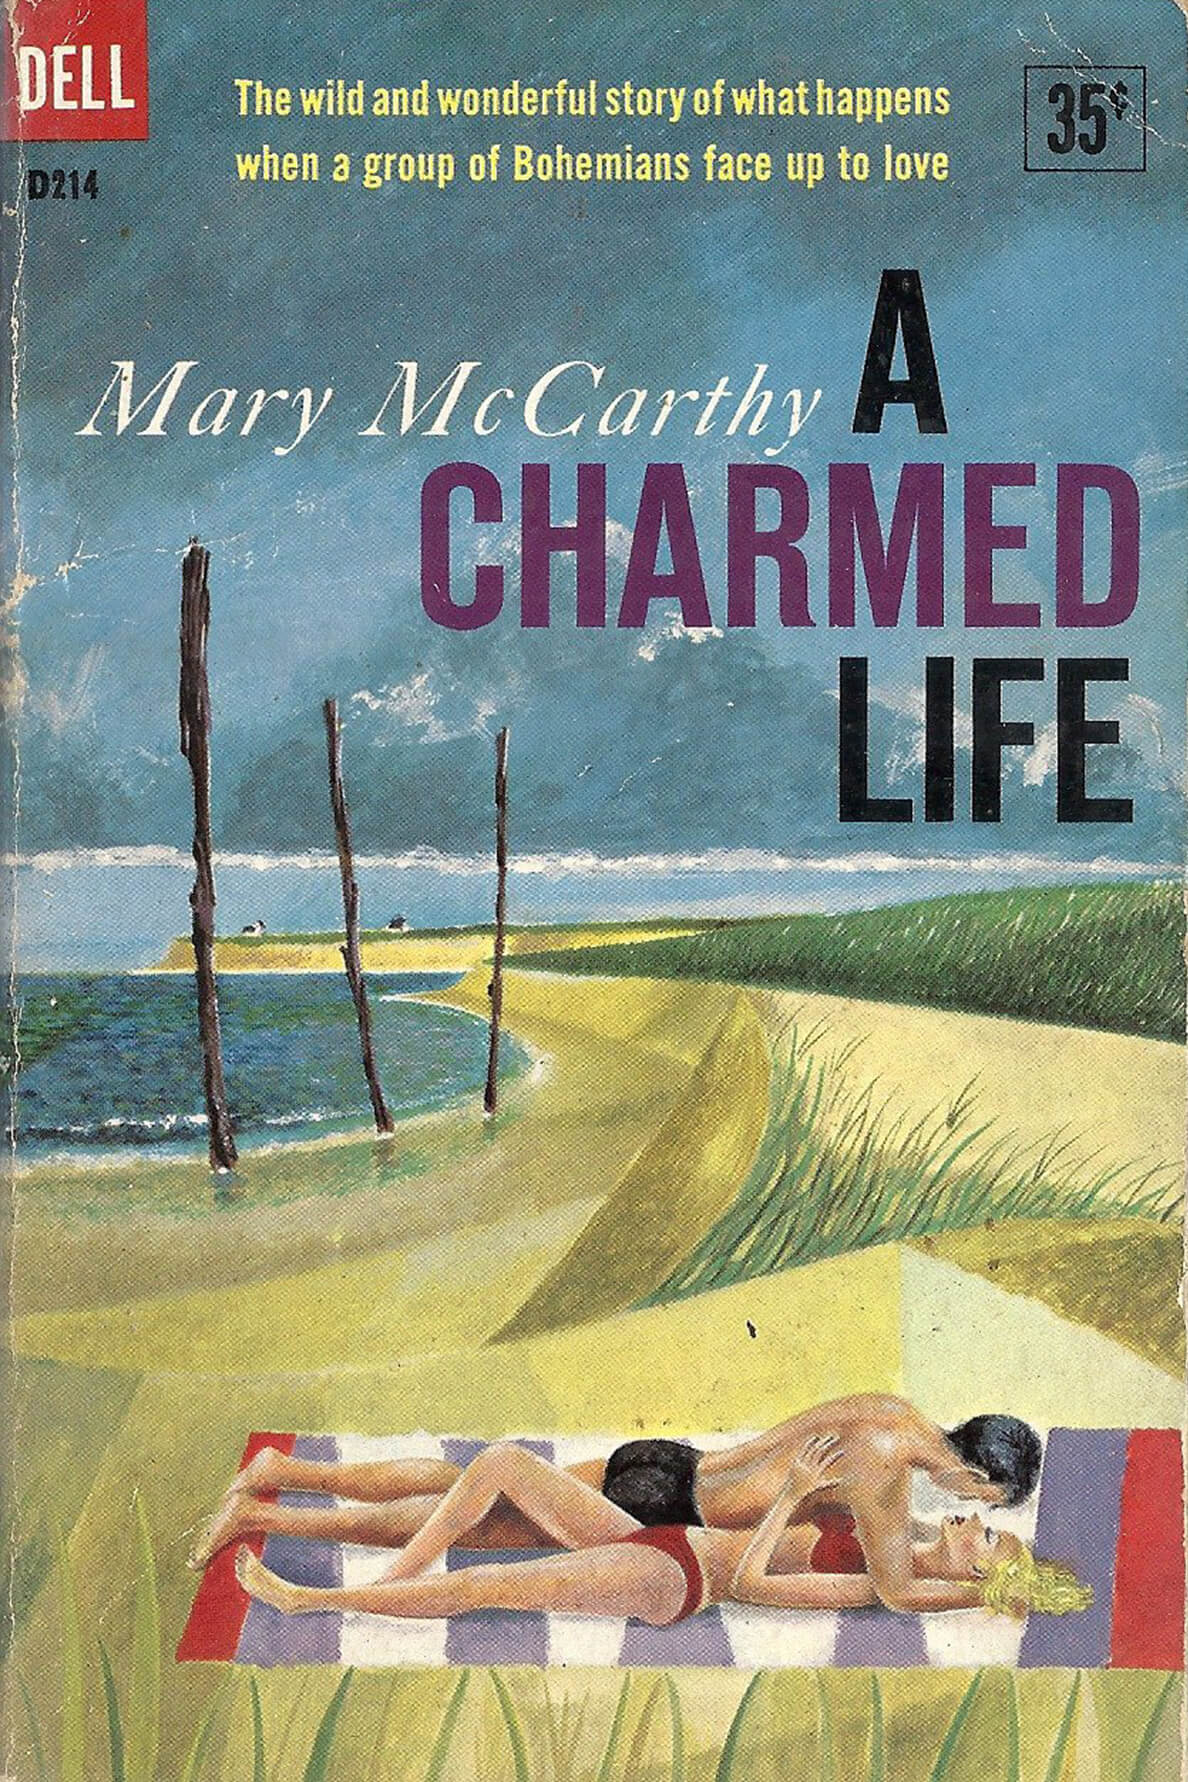 A paperback copy of McCarthy's 1955 novel, <em>A Charmed Life</em>.